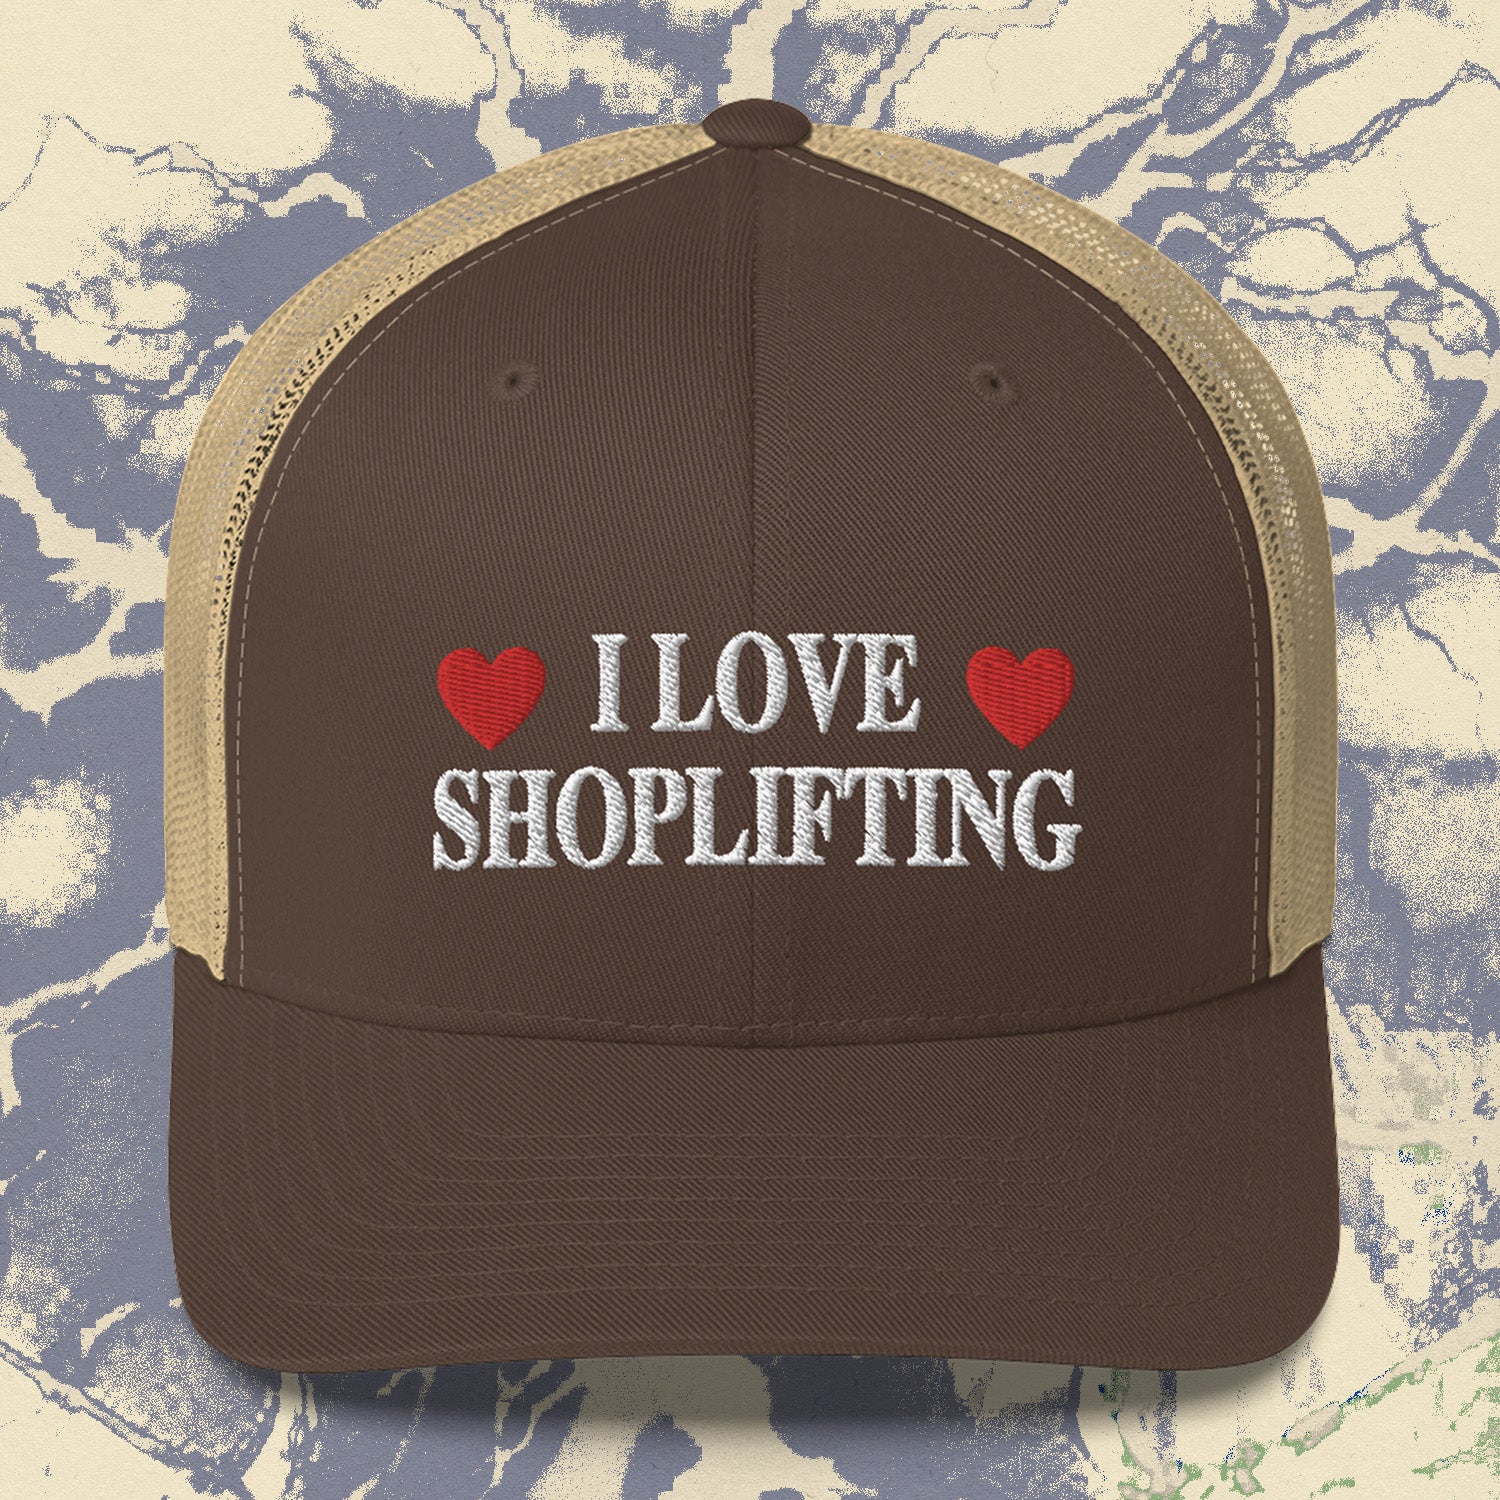 ❤️ shoplifting